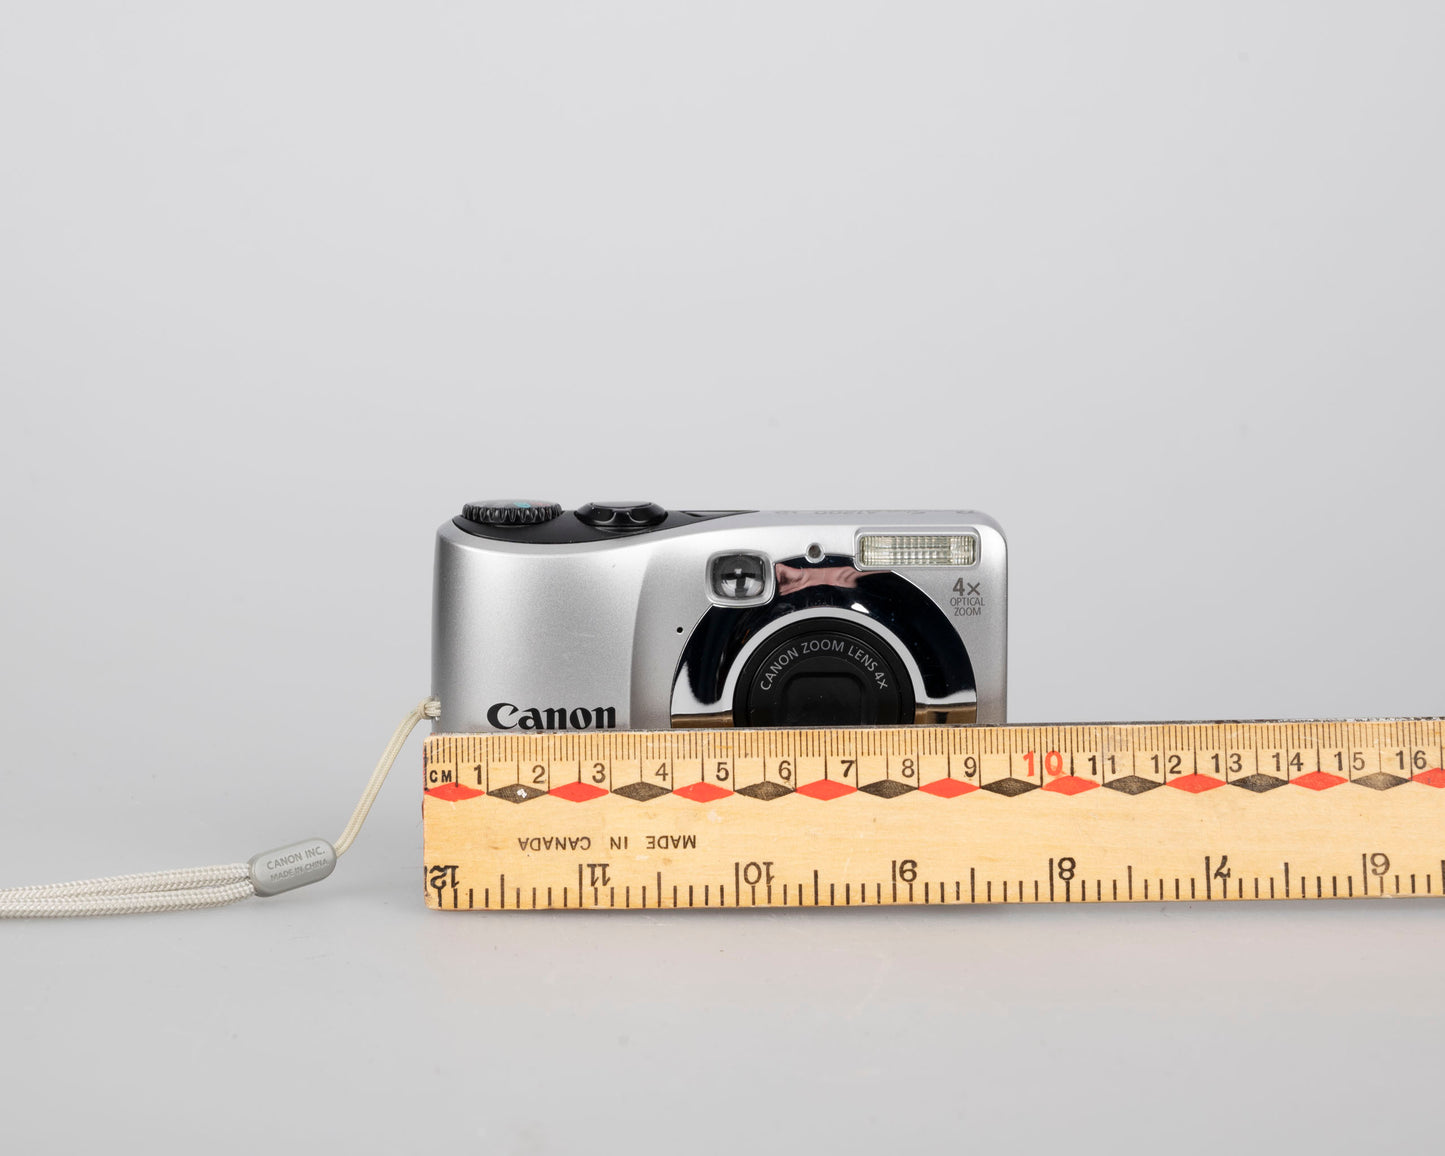 Canon Powershot A1200 digicam w/ 12 MP CCD sensor + 2 GB SD card (uses AA batteries)